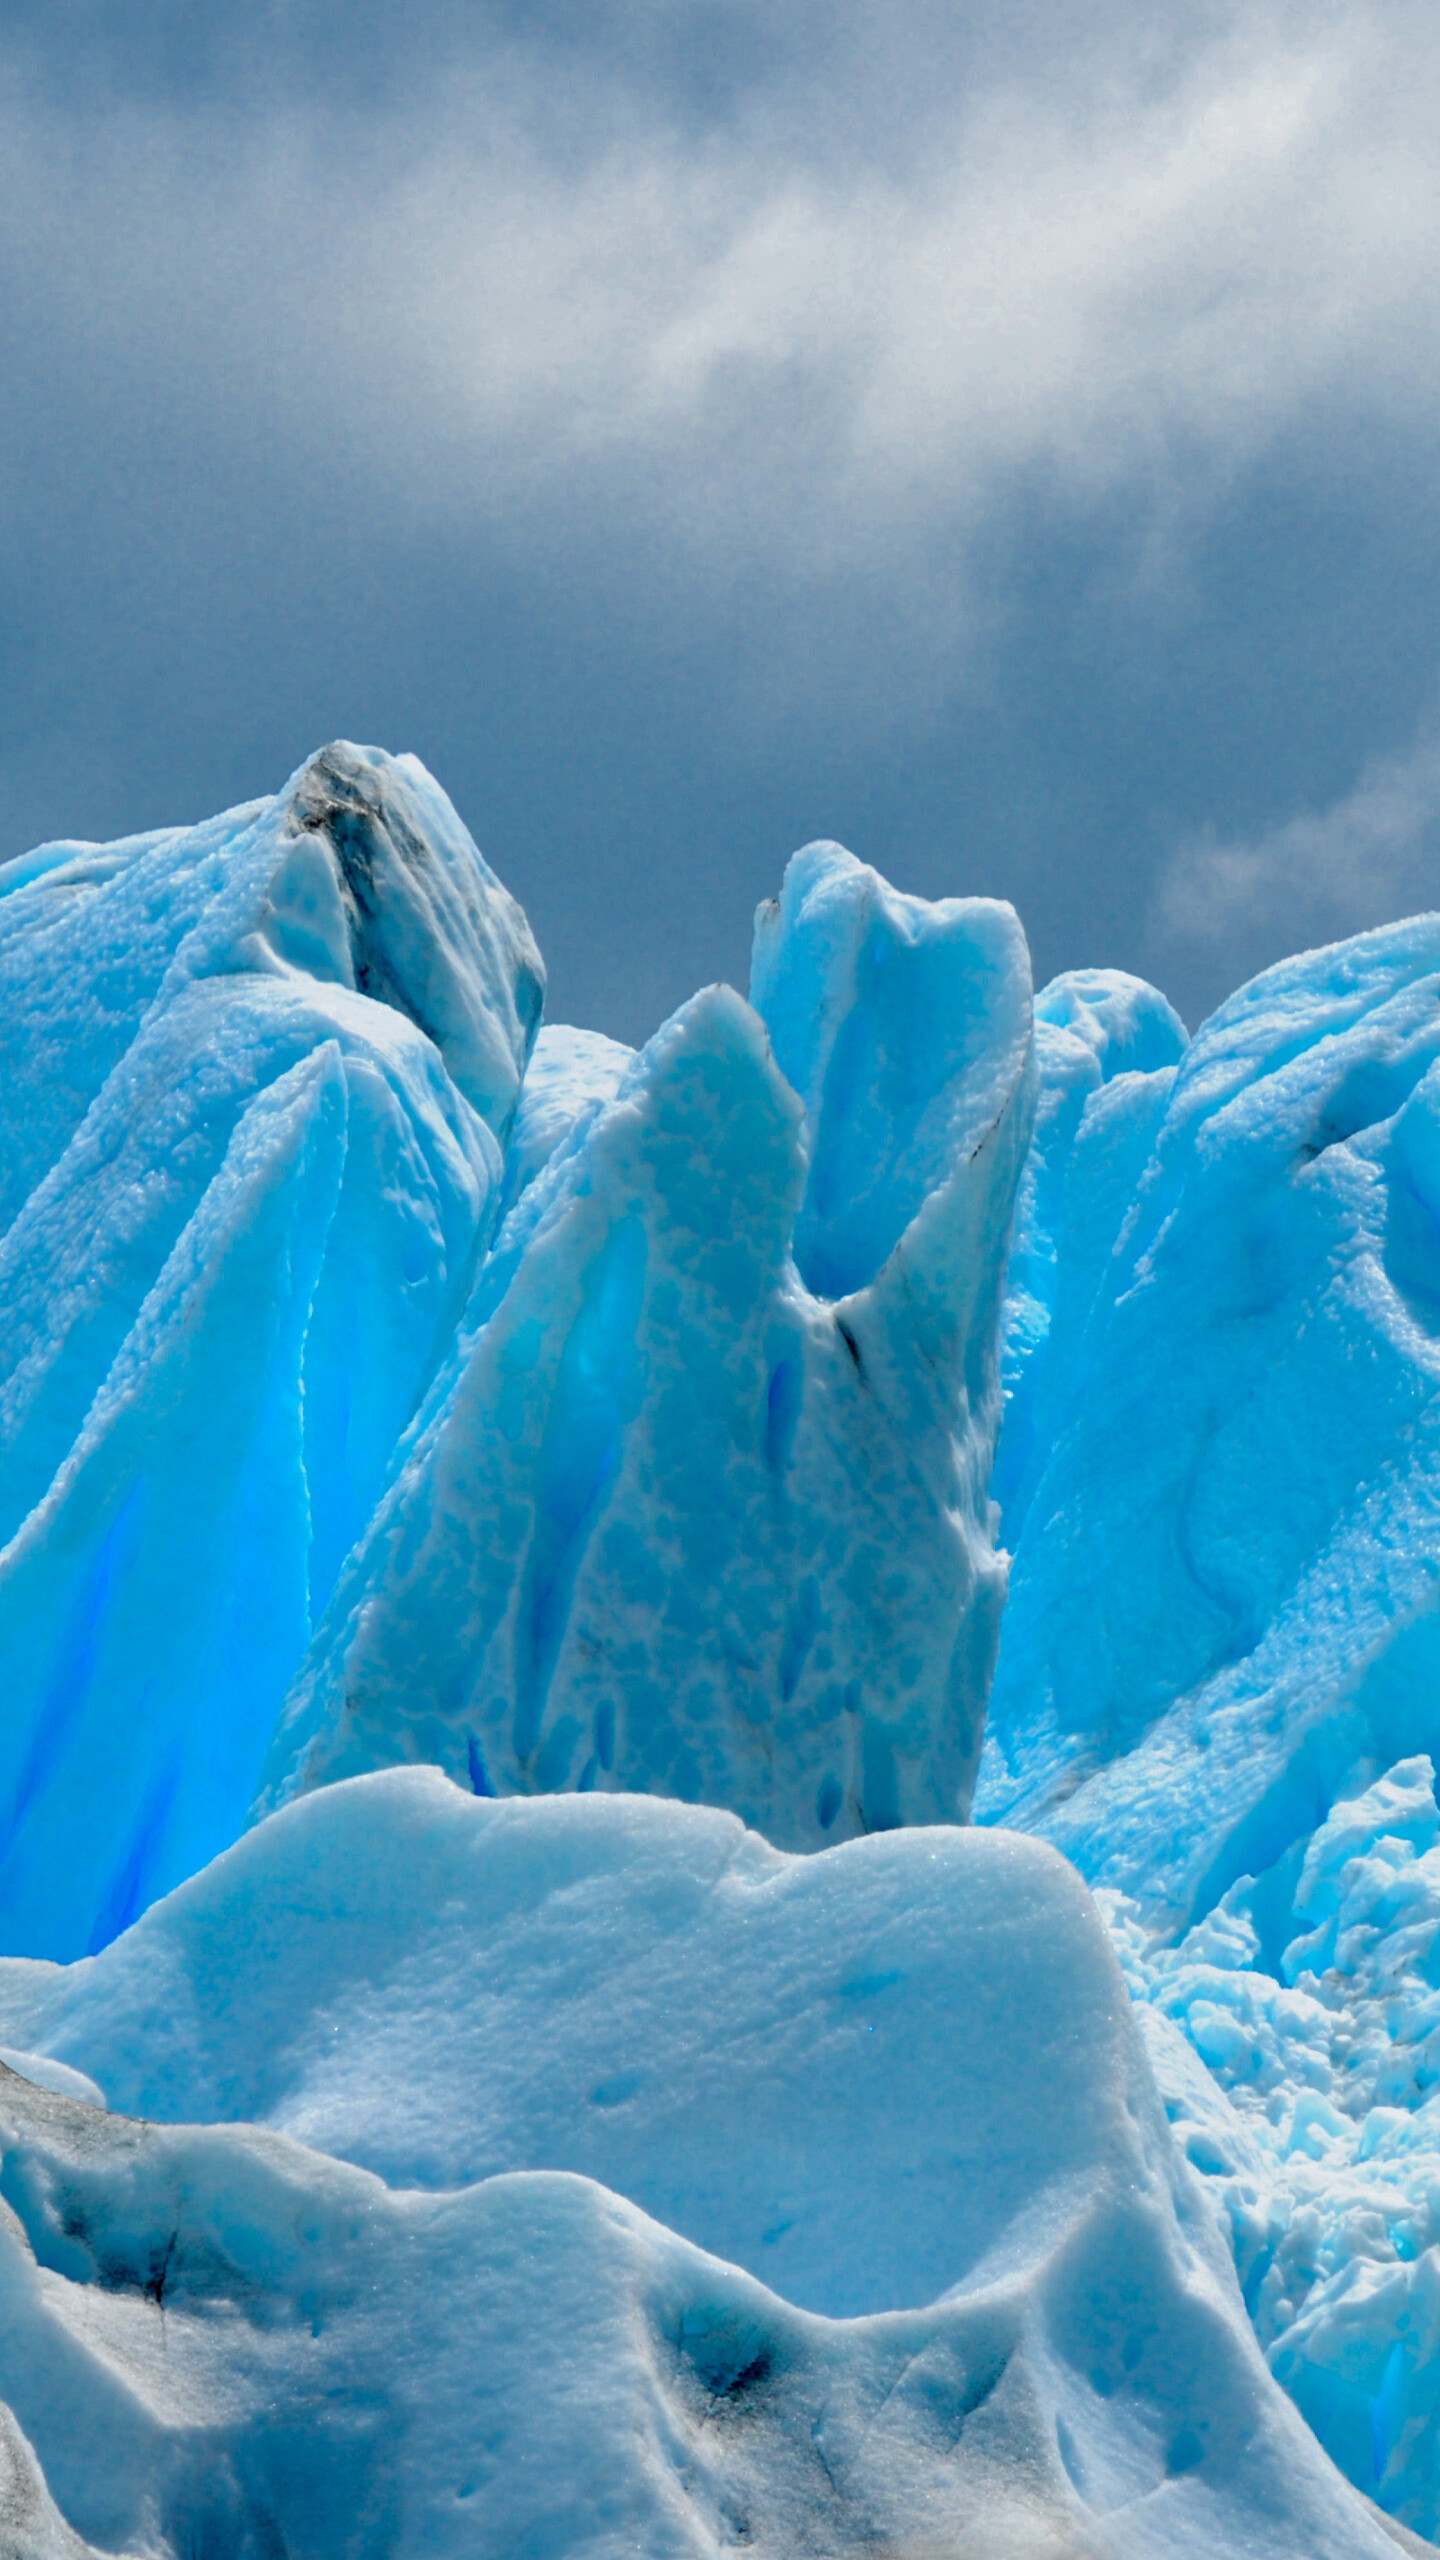 Glacier: Icebergs, Blue snow, Nature, Massive body of slowly moving ice. 1440x2560 HD Wallpaper.